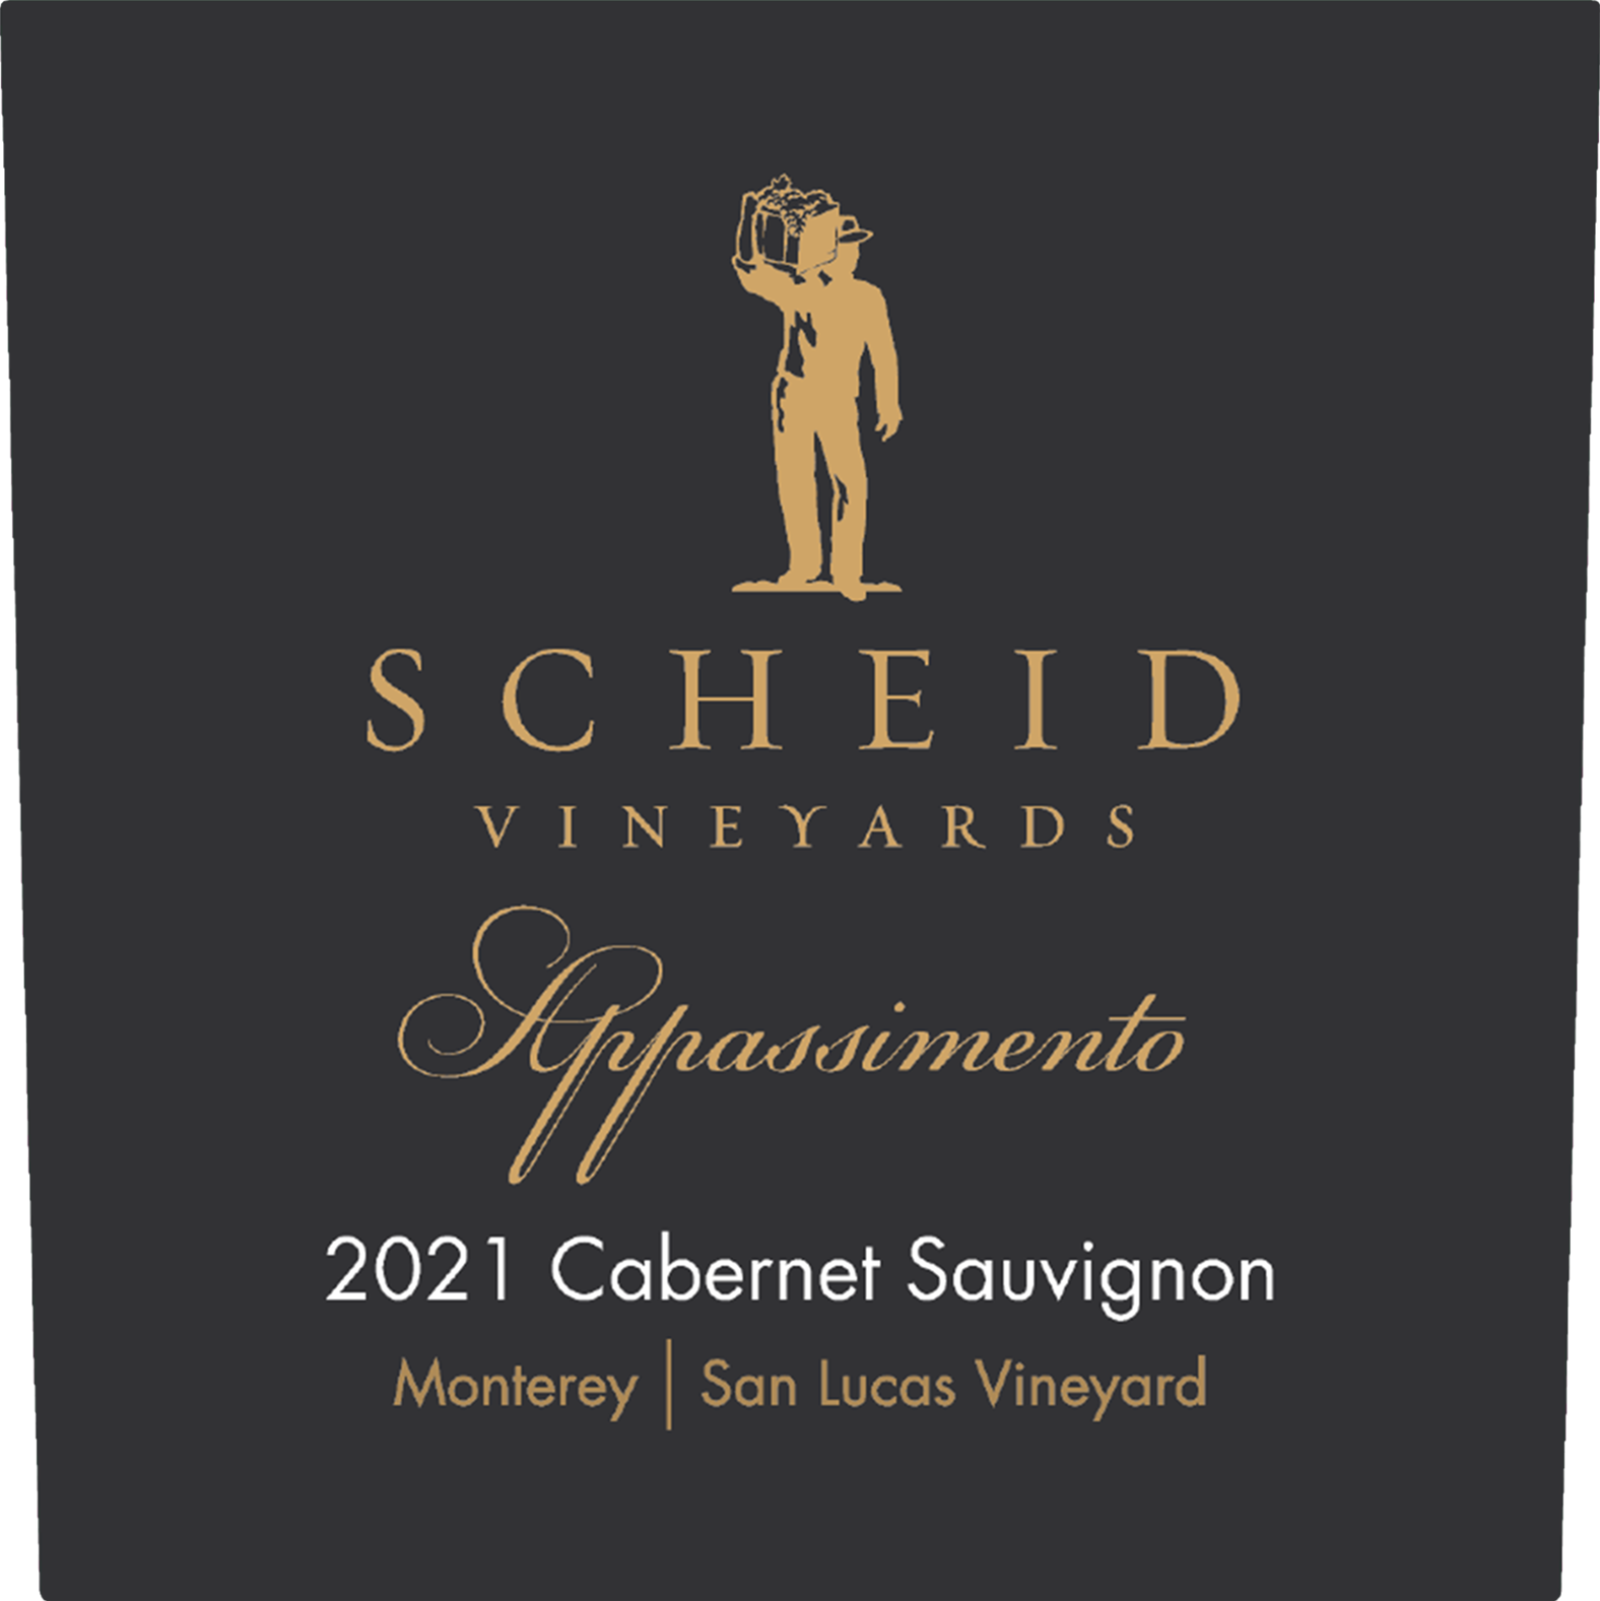 Scheid Vineyards Cabernet Sauvignon Reserve Appassimento 2021